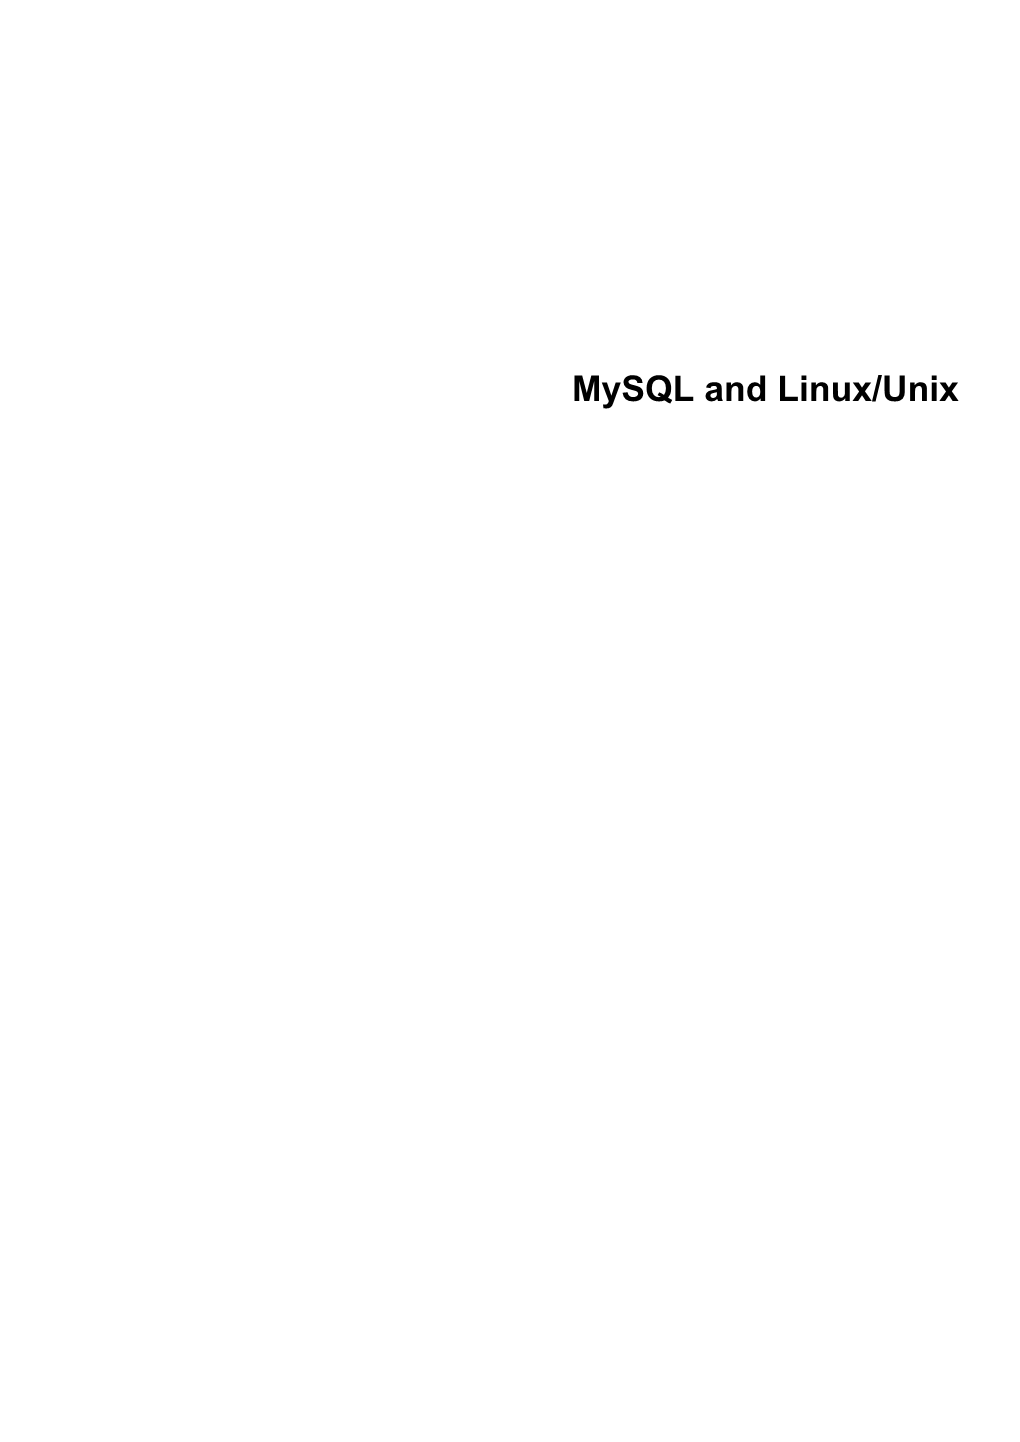 Mysql and Linux/Unix Abstract